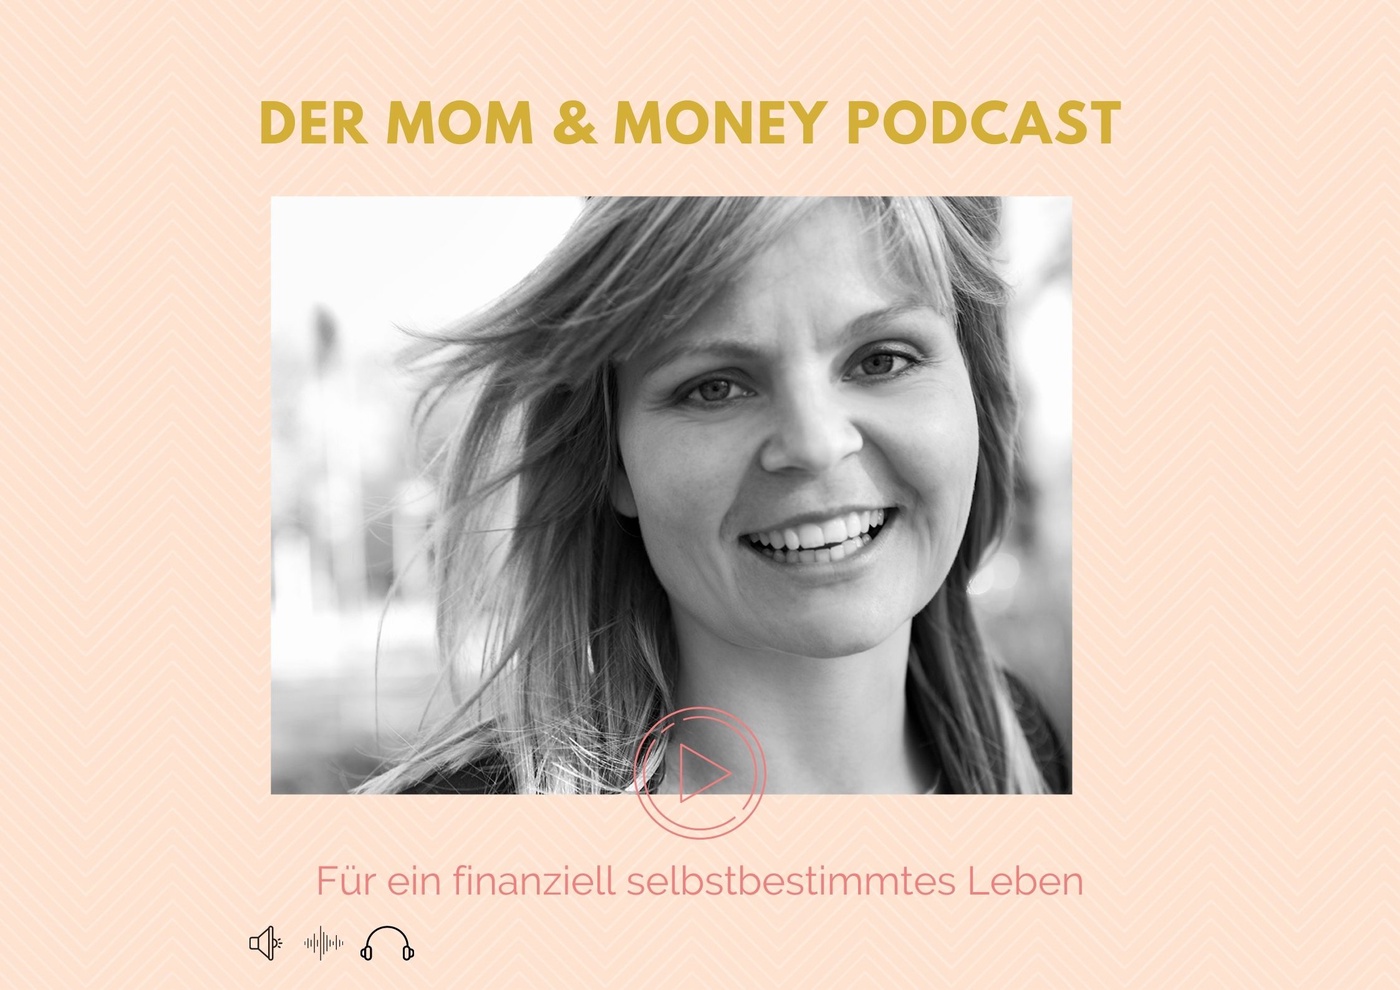 Der Mom and Money Podcast